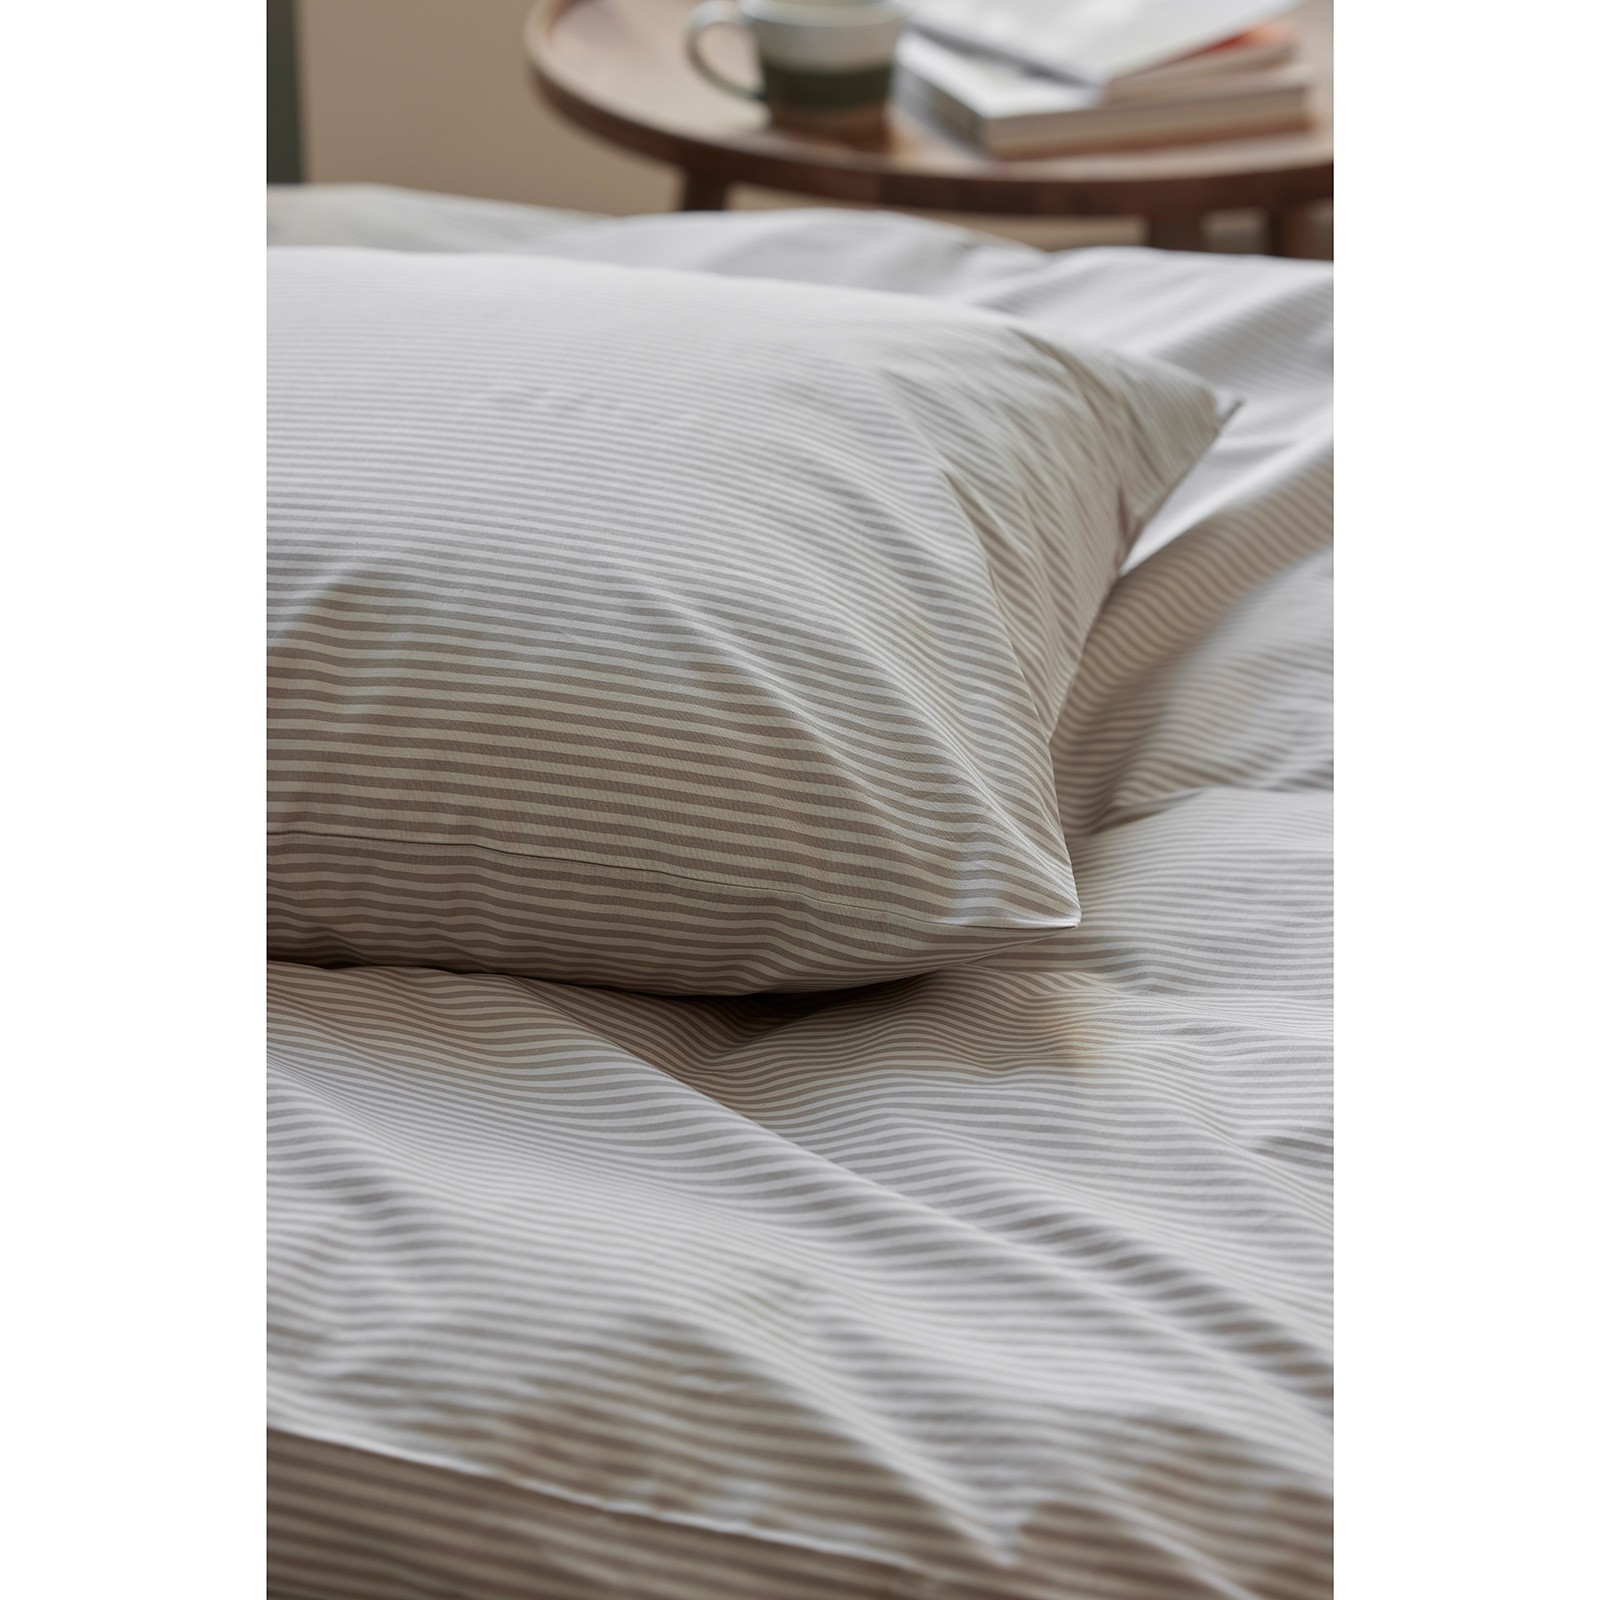 Södahl Classic Stripe sengetøj 140x200 cm taupe